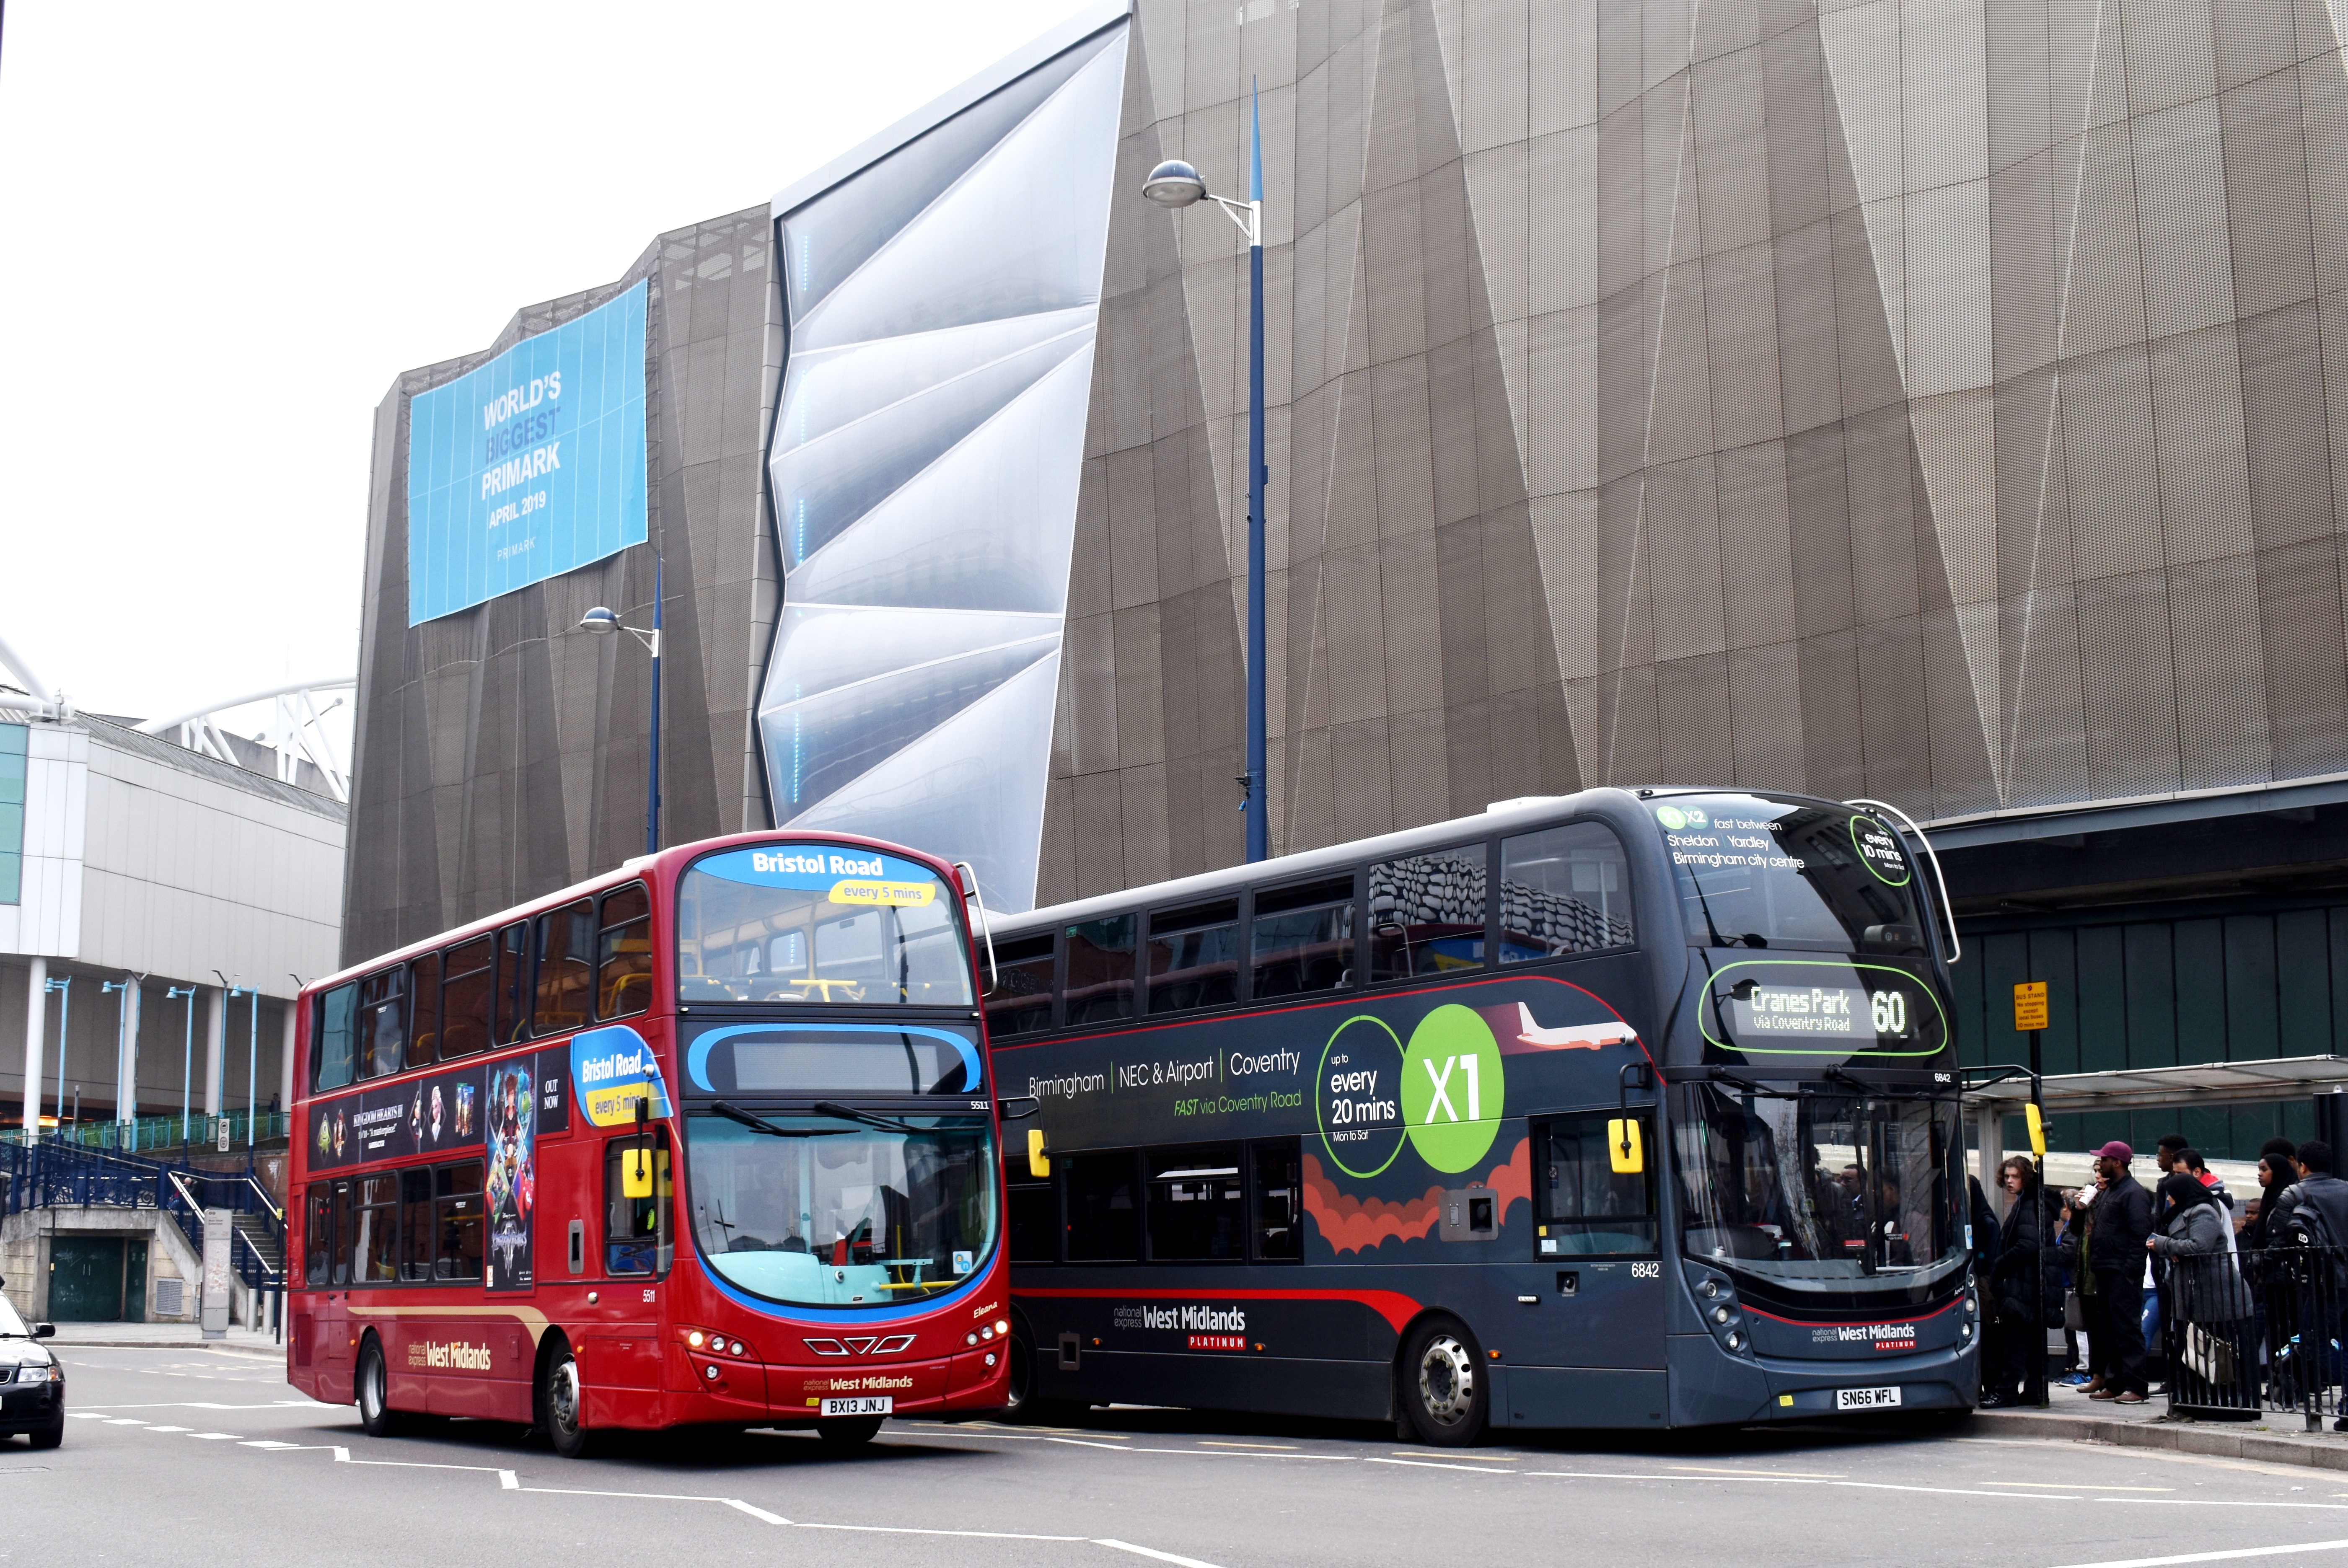 National Express West Midlands offer free bus ticket for Primark opening weekend